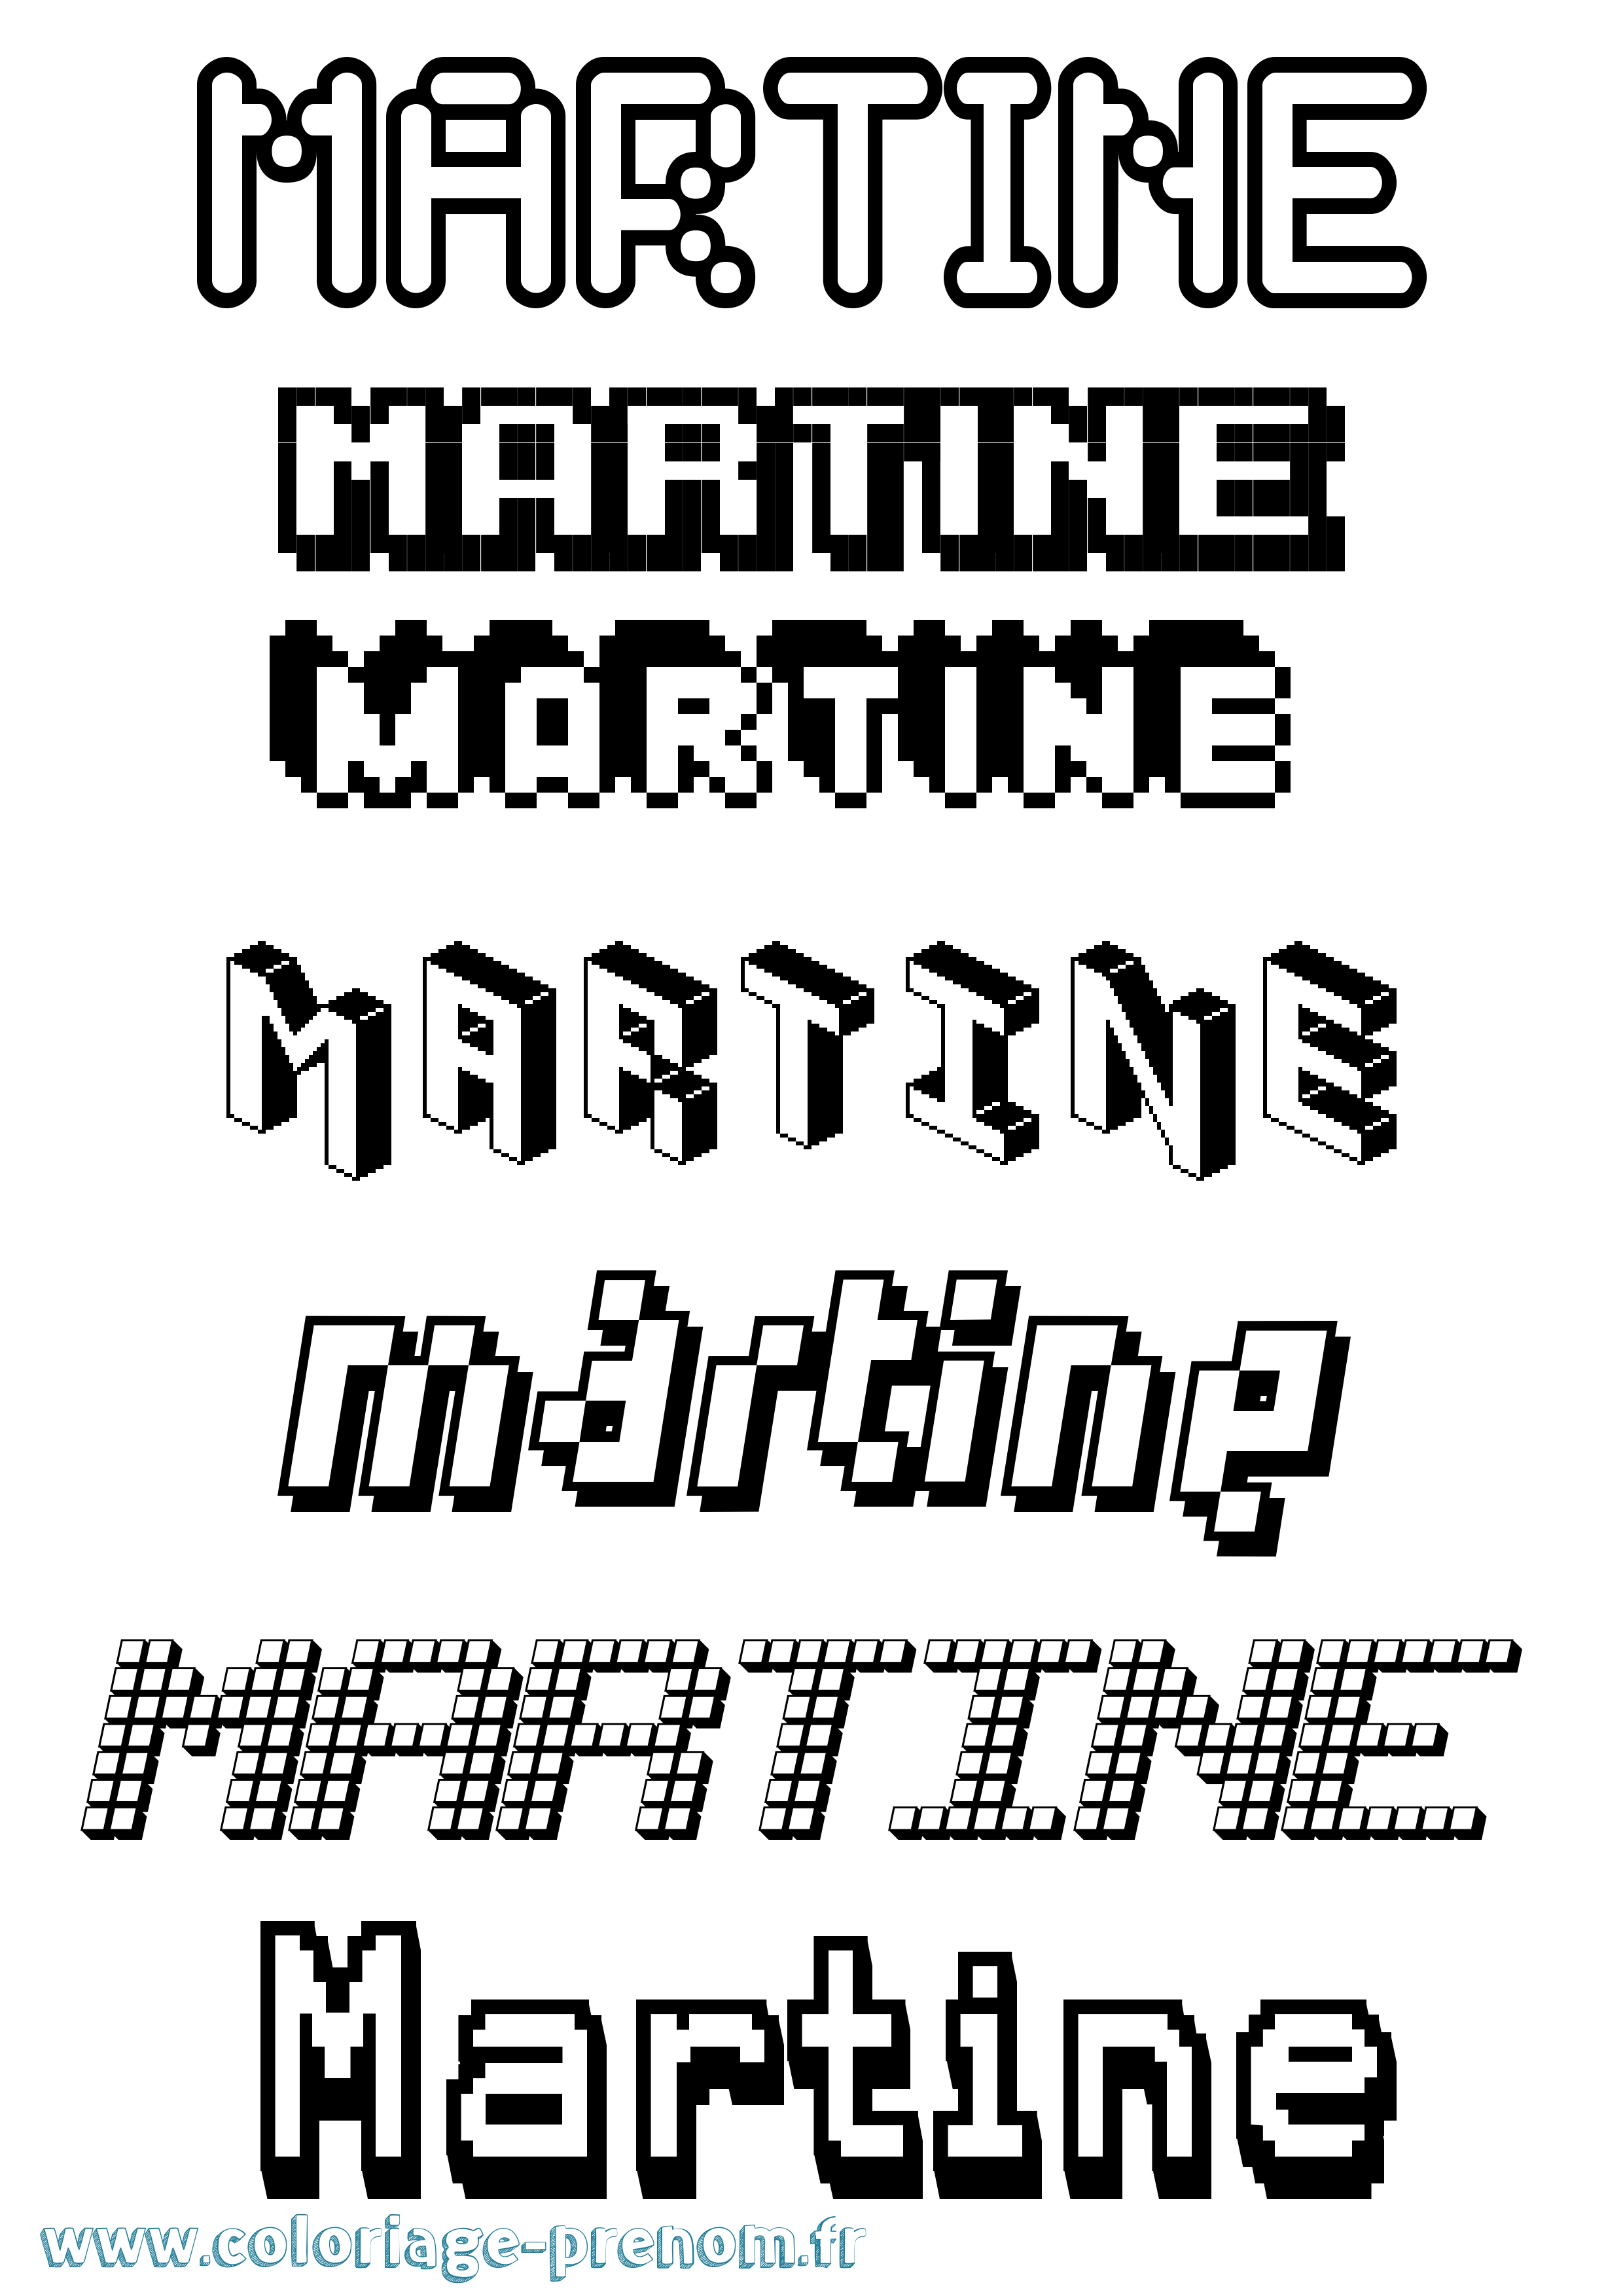 Coloriage prénom Martine Pixel